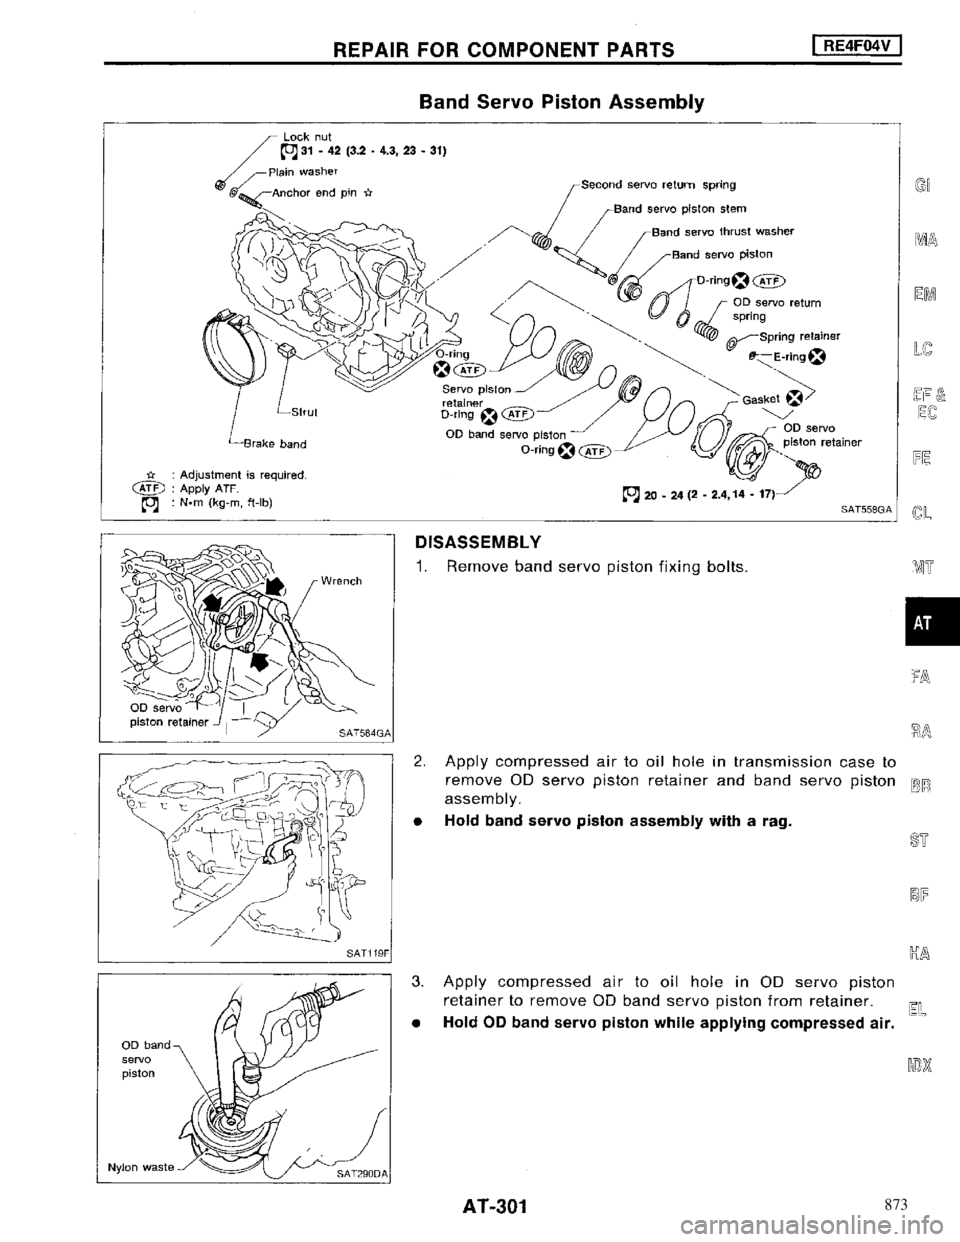 NISSAN MAXIMA 1994 A32 / 4.G Automatic Transaxle Workshop Manual 873 